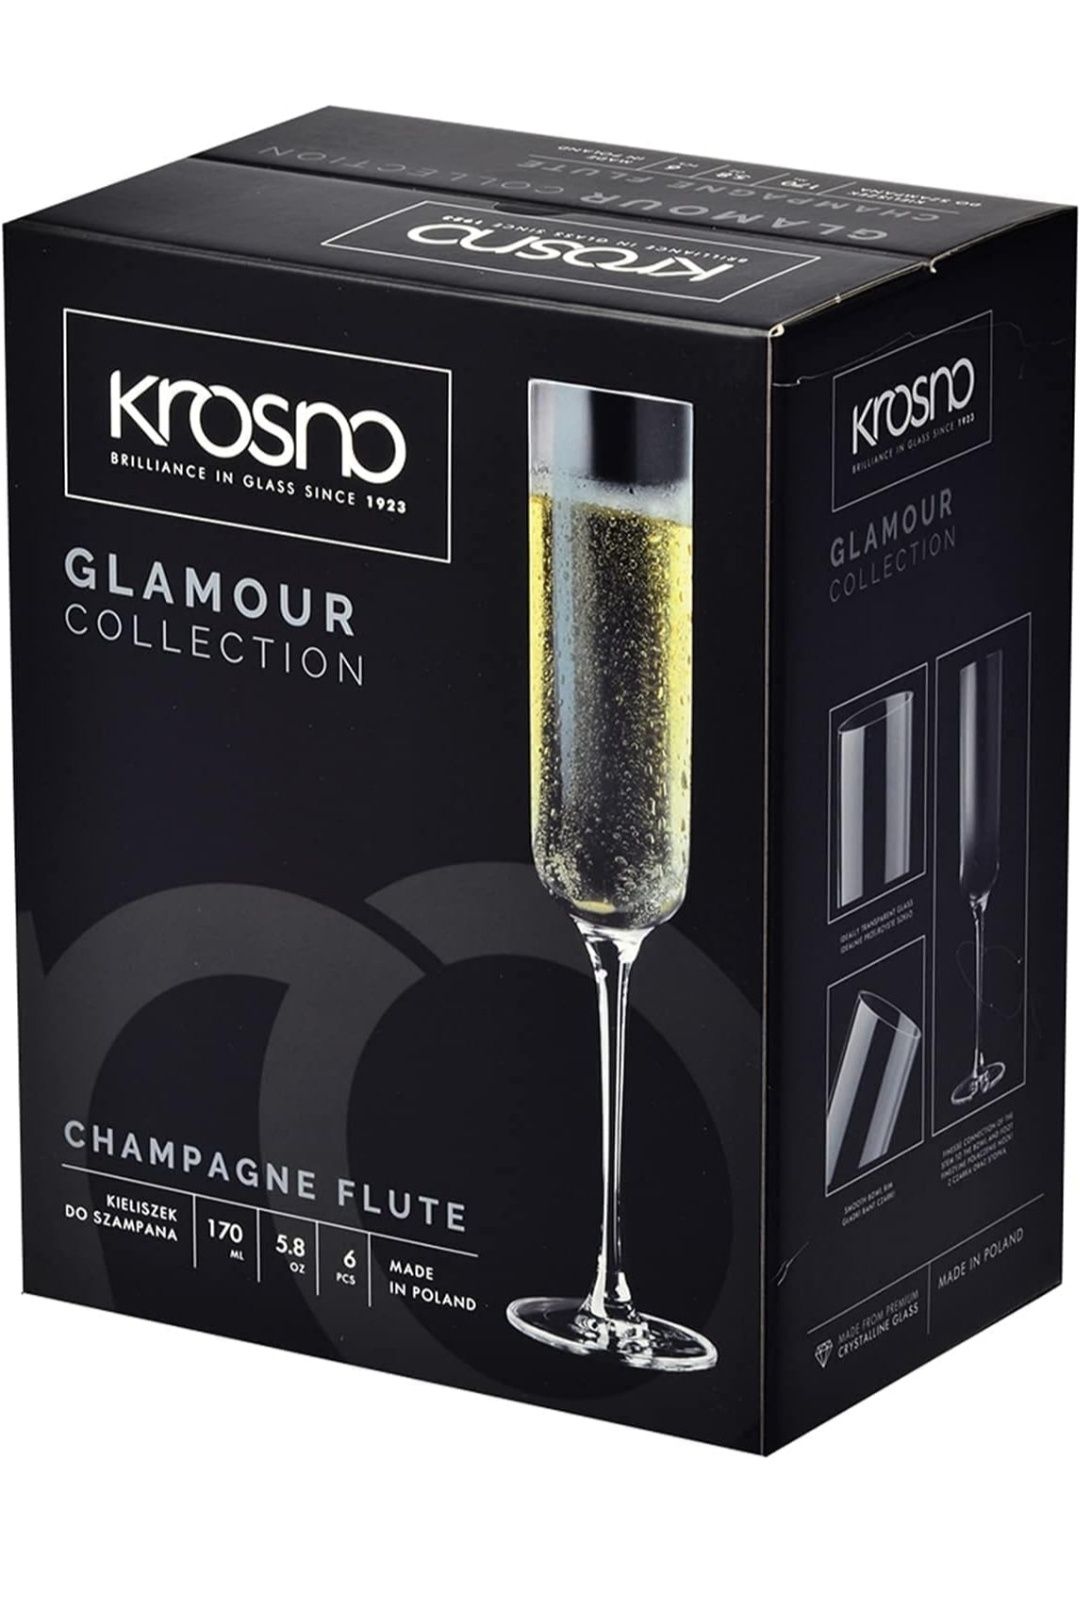 Kieliszki do szampana 170ml GLAMOUR | KROSNO